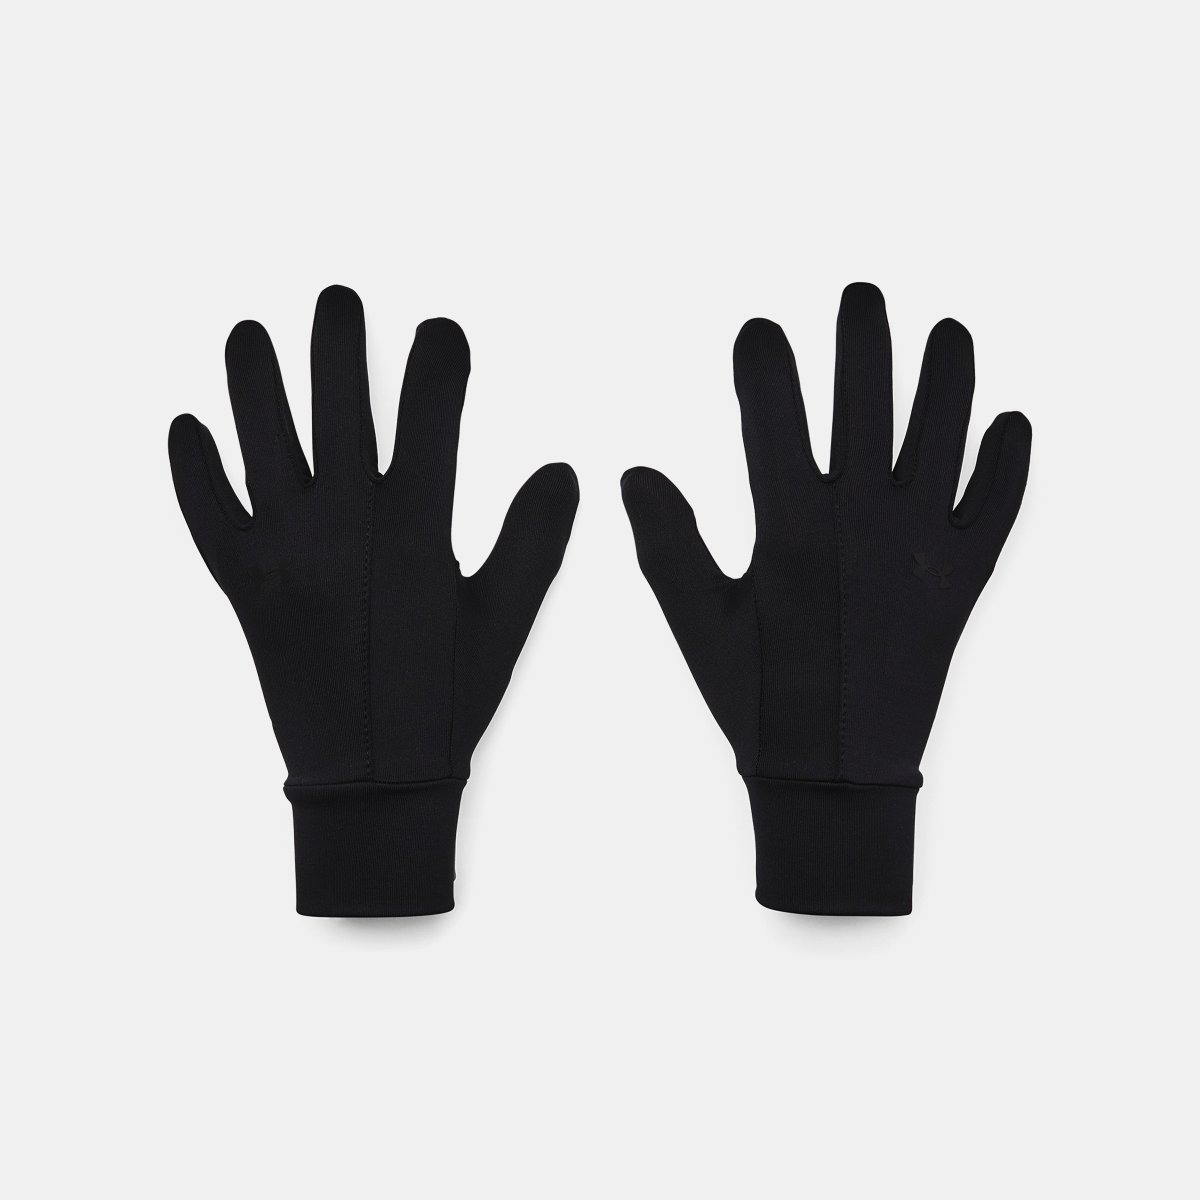 Gloves in Black - Under Armour Woman - Under Armour GOOFASH